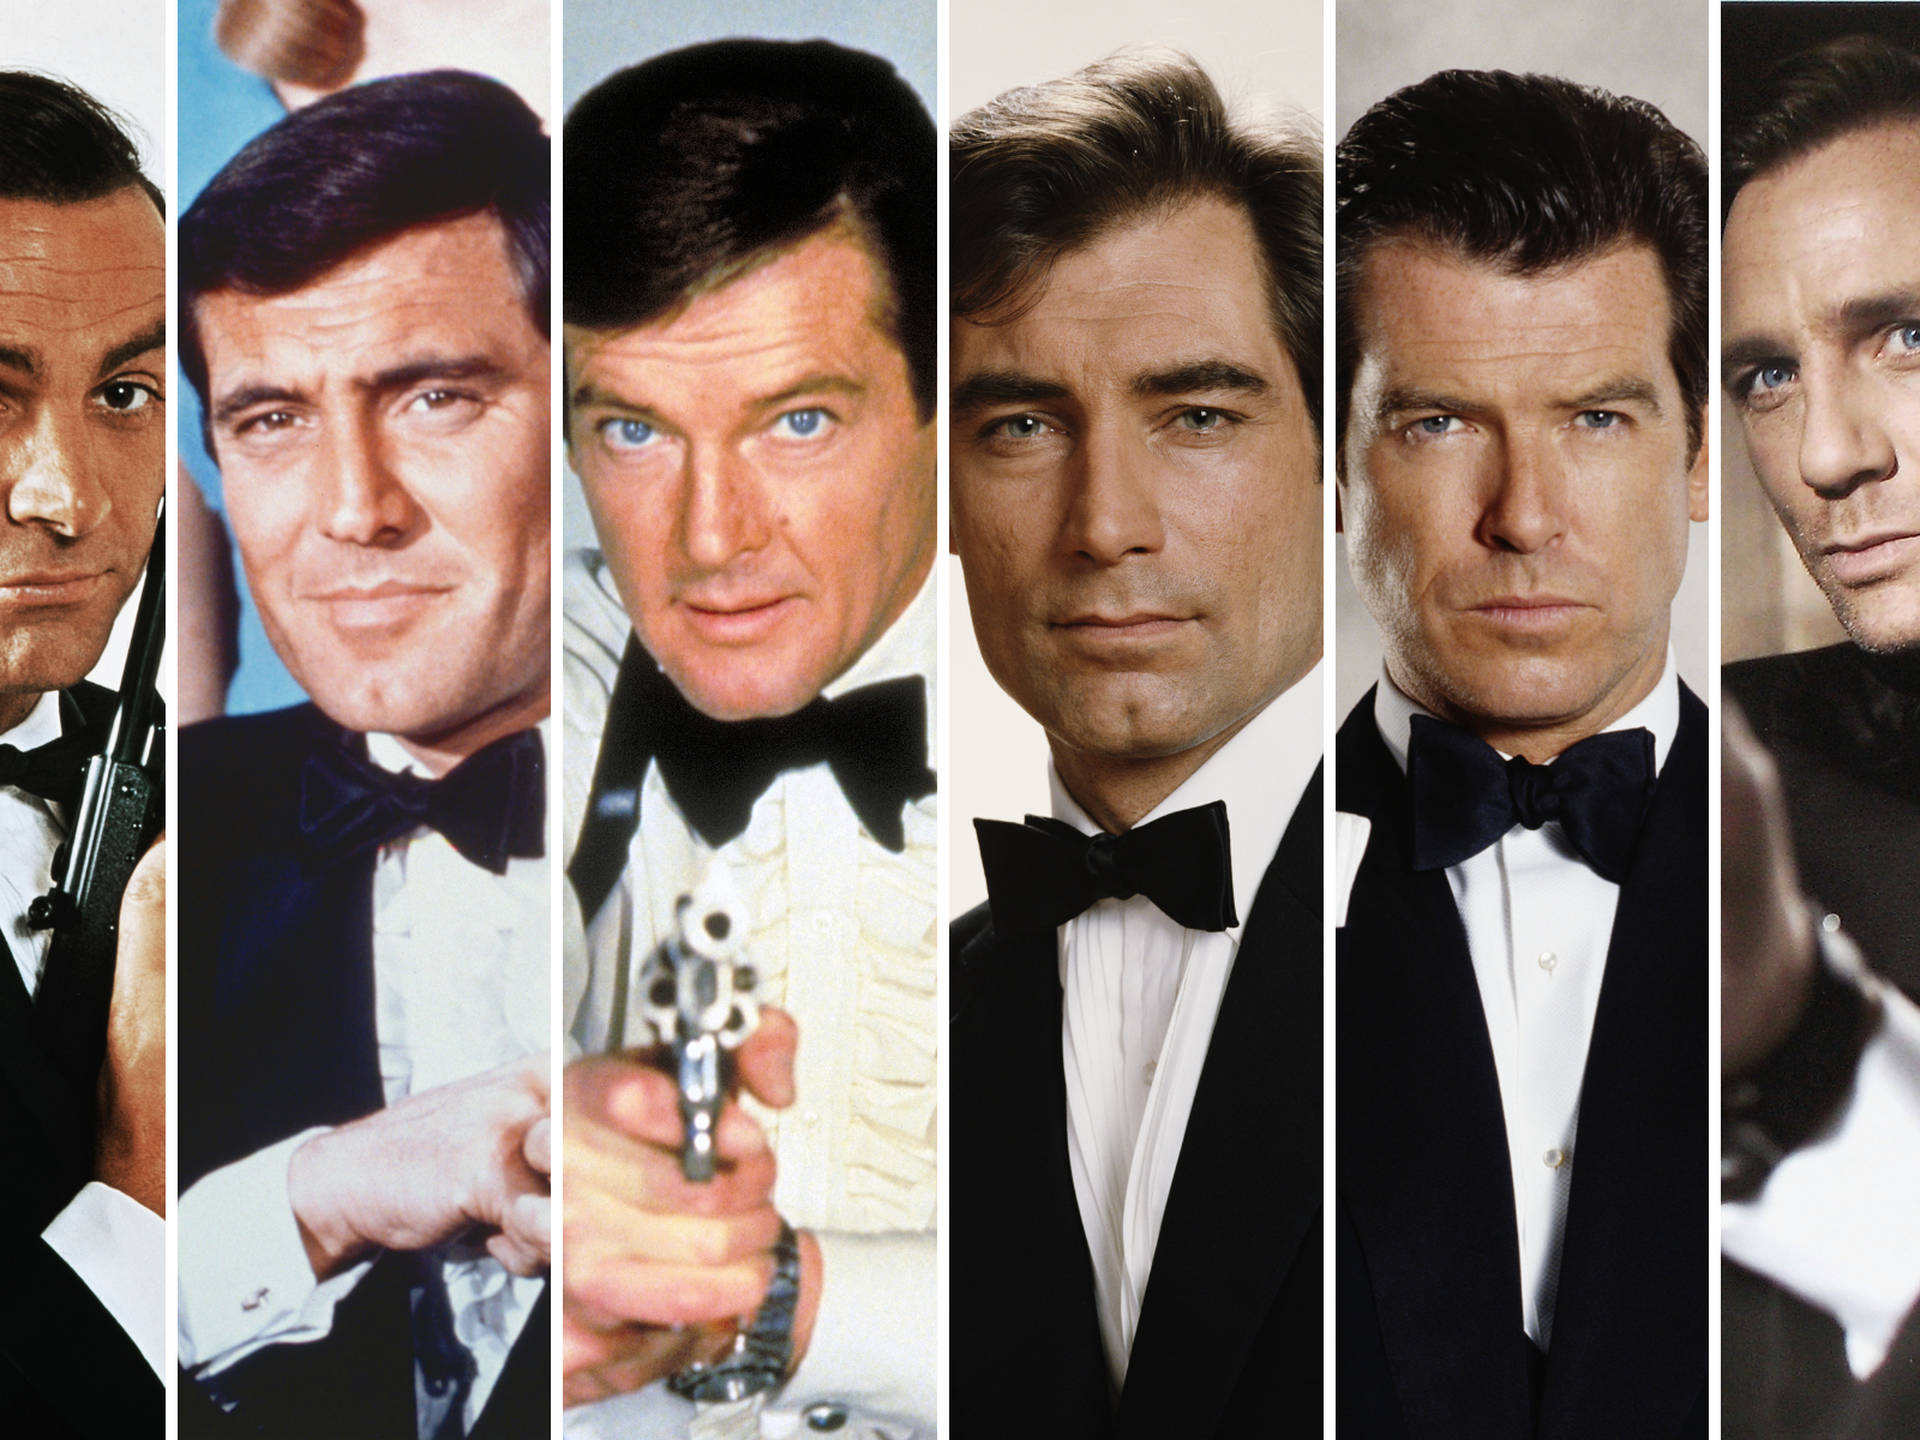 All James Bond Actors Together